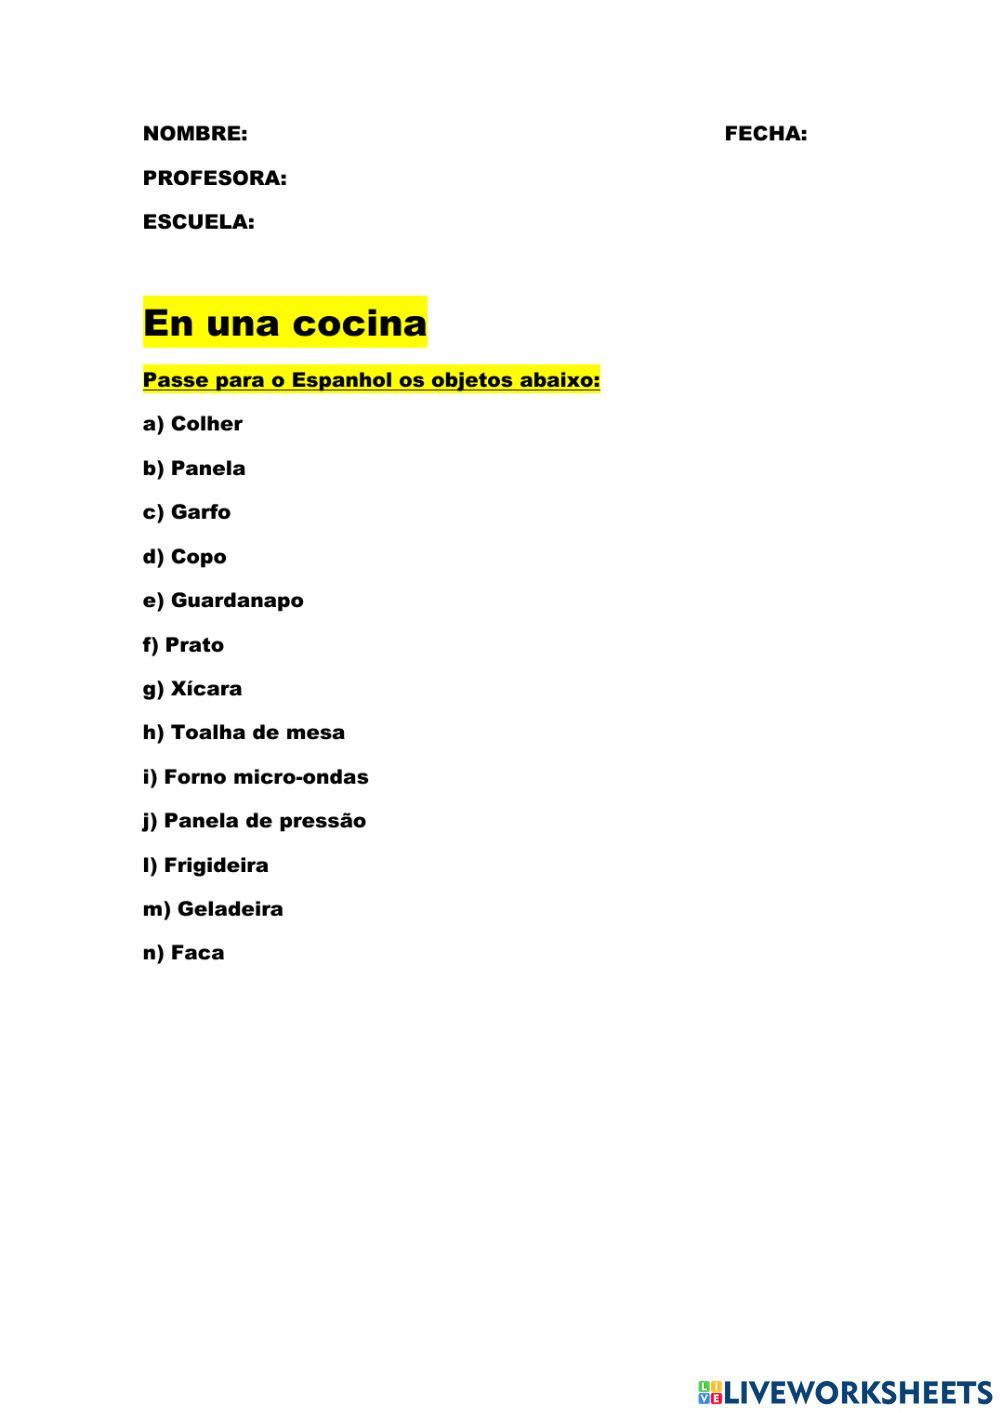 ESPANHOL - LA COCINA online exercise for